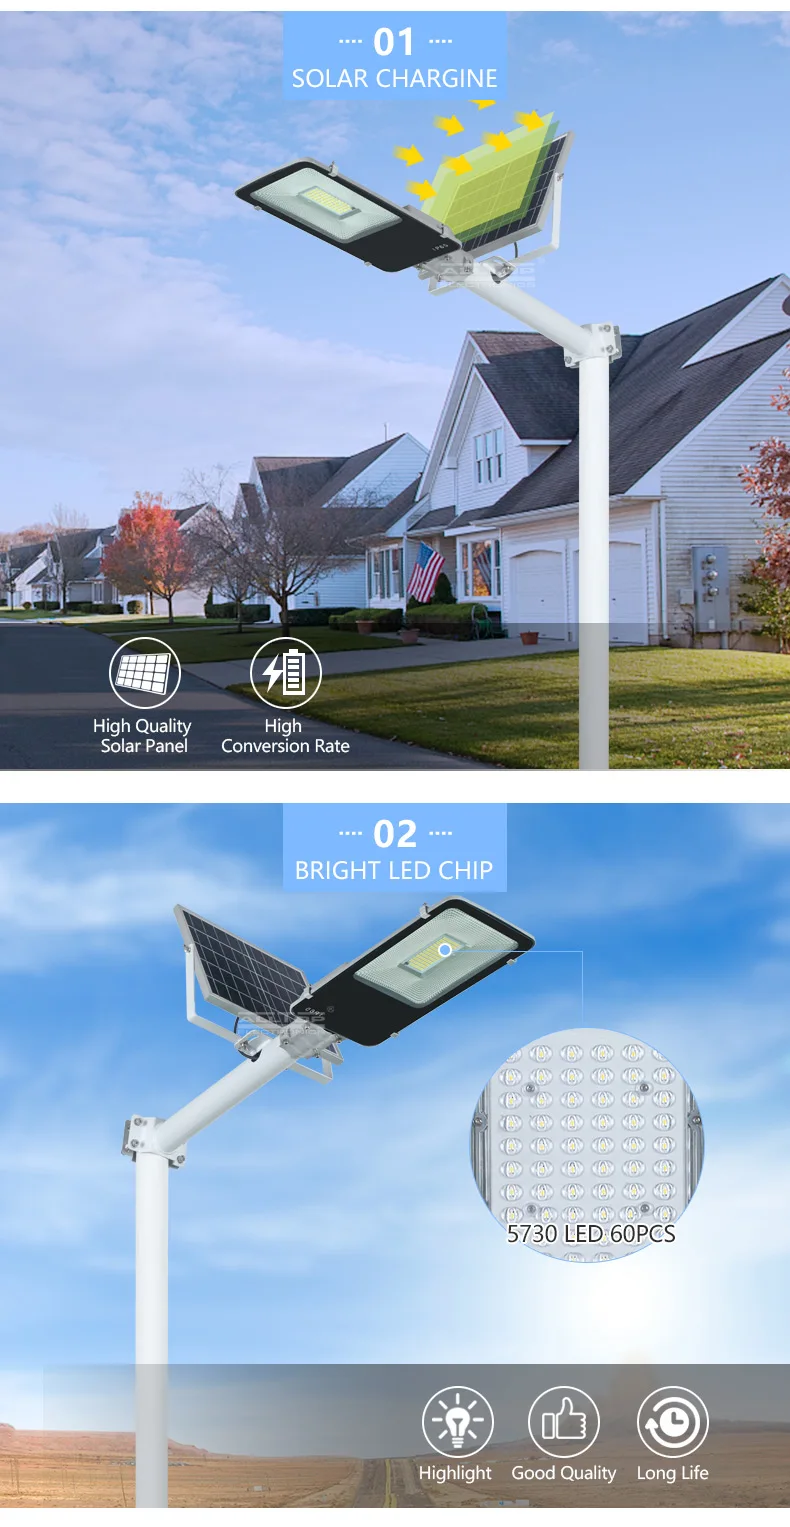 ALLTOP Integrated 100watt ip65 outdoor waterproof remote control solar led street lamp price